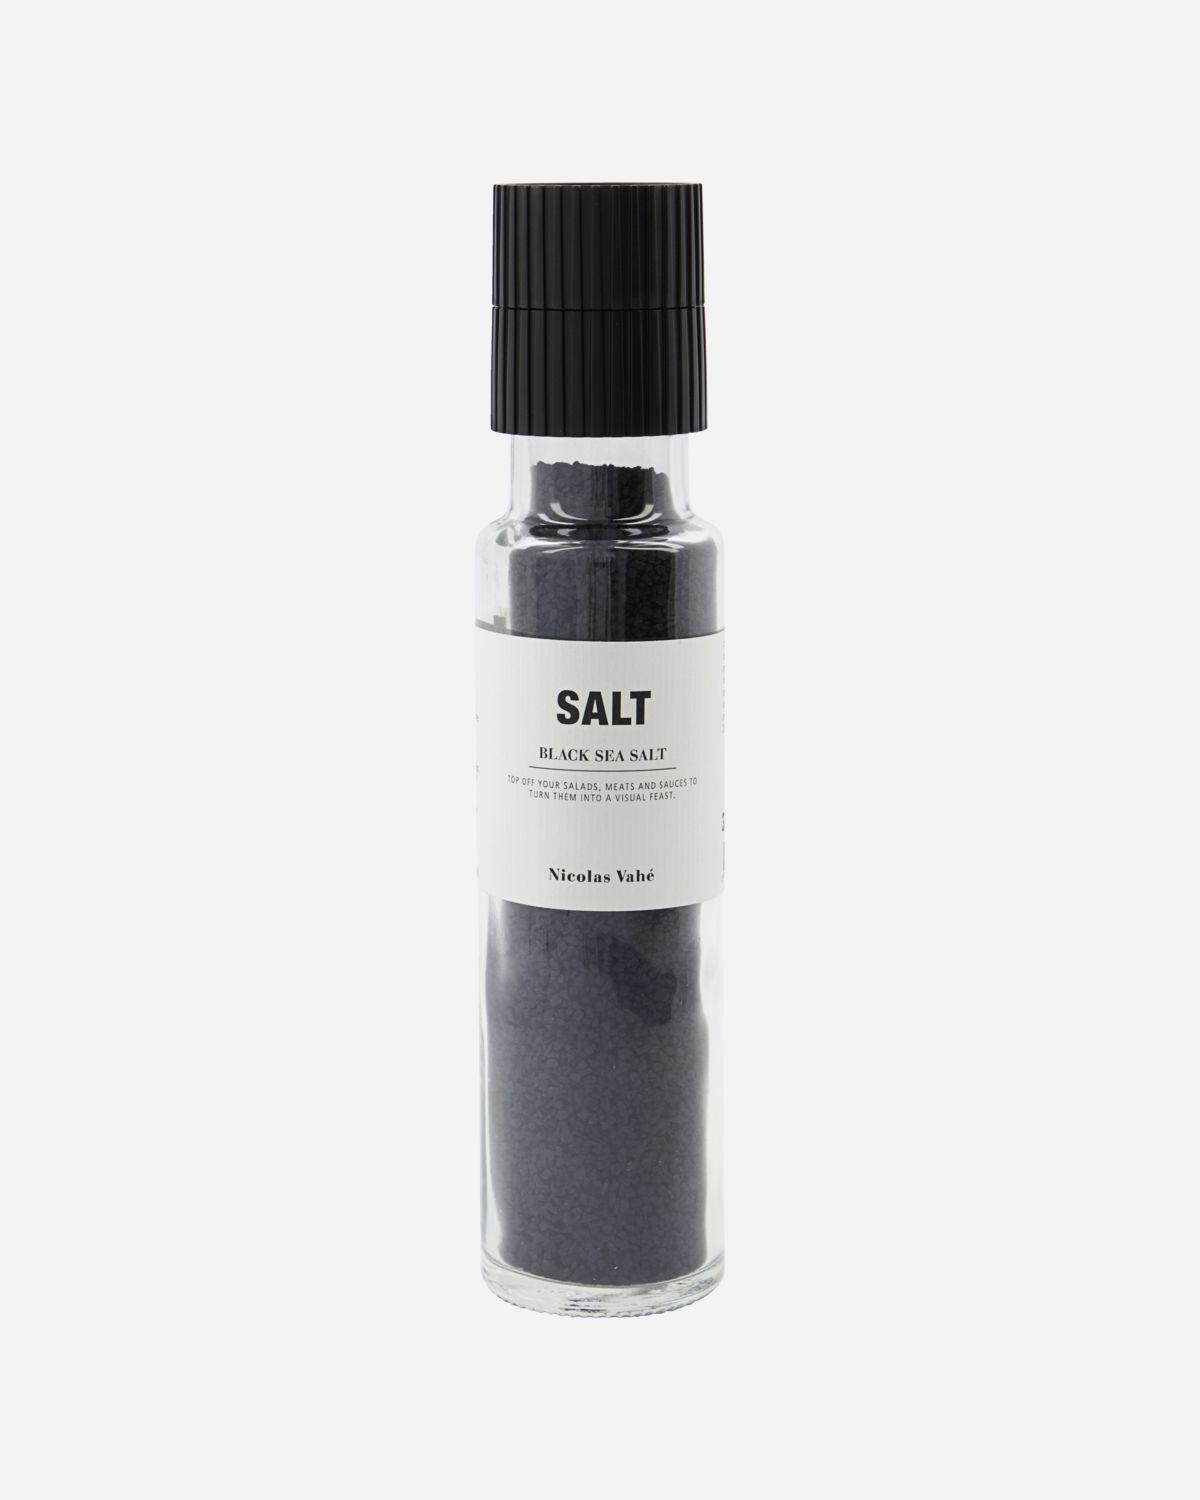 Salt black sea salt Nicolas Vahé